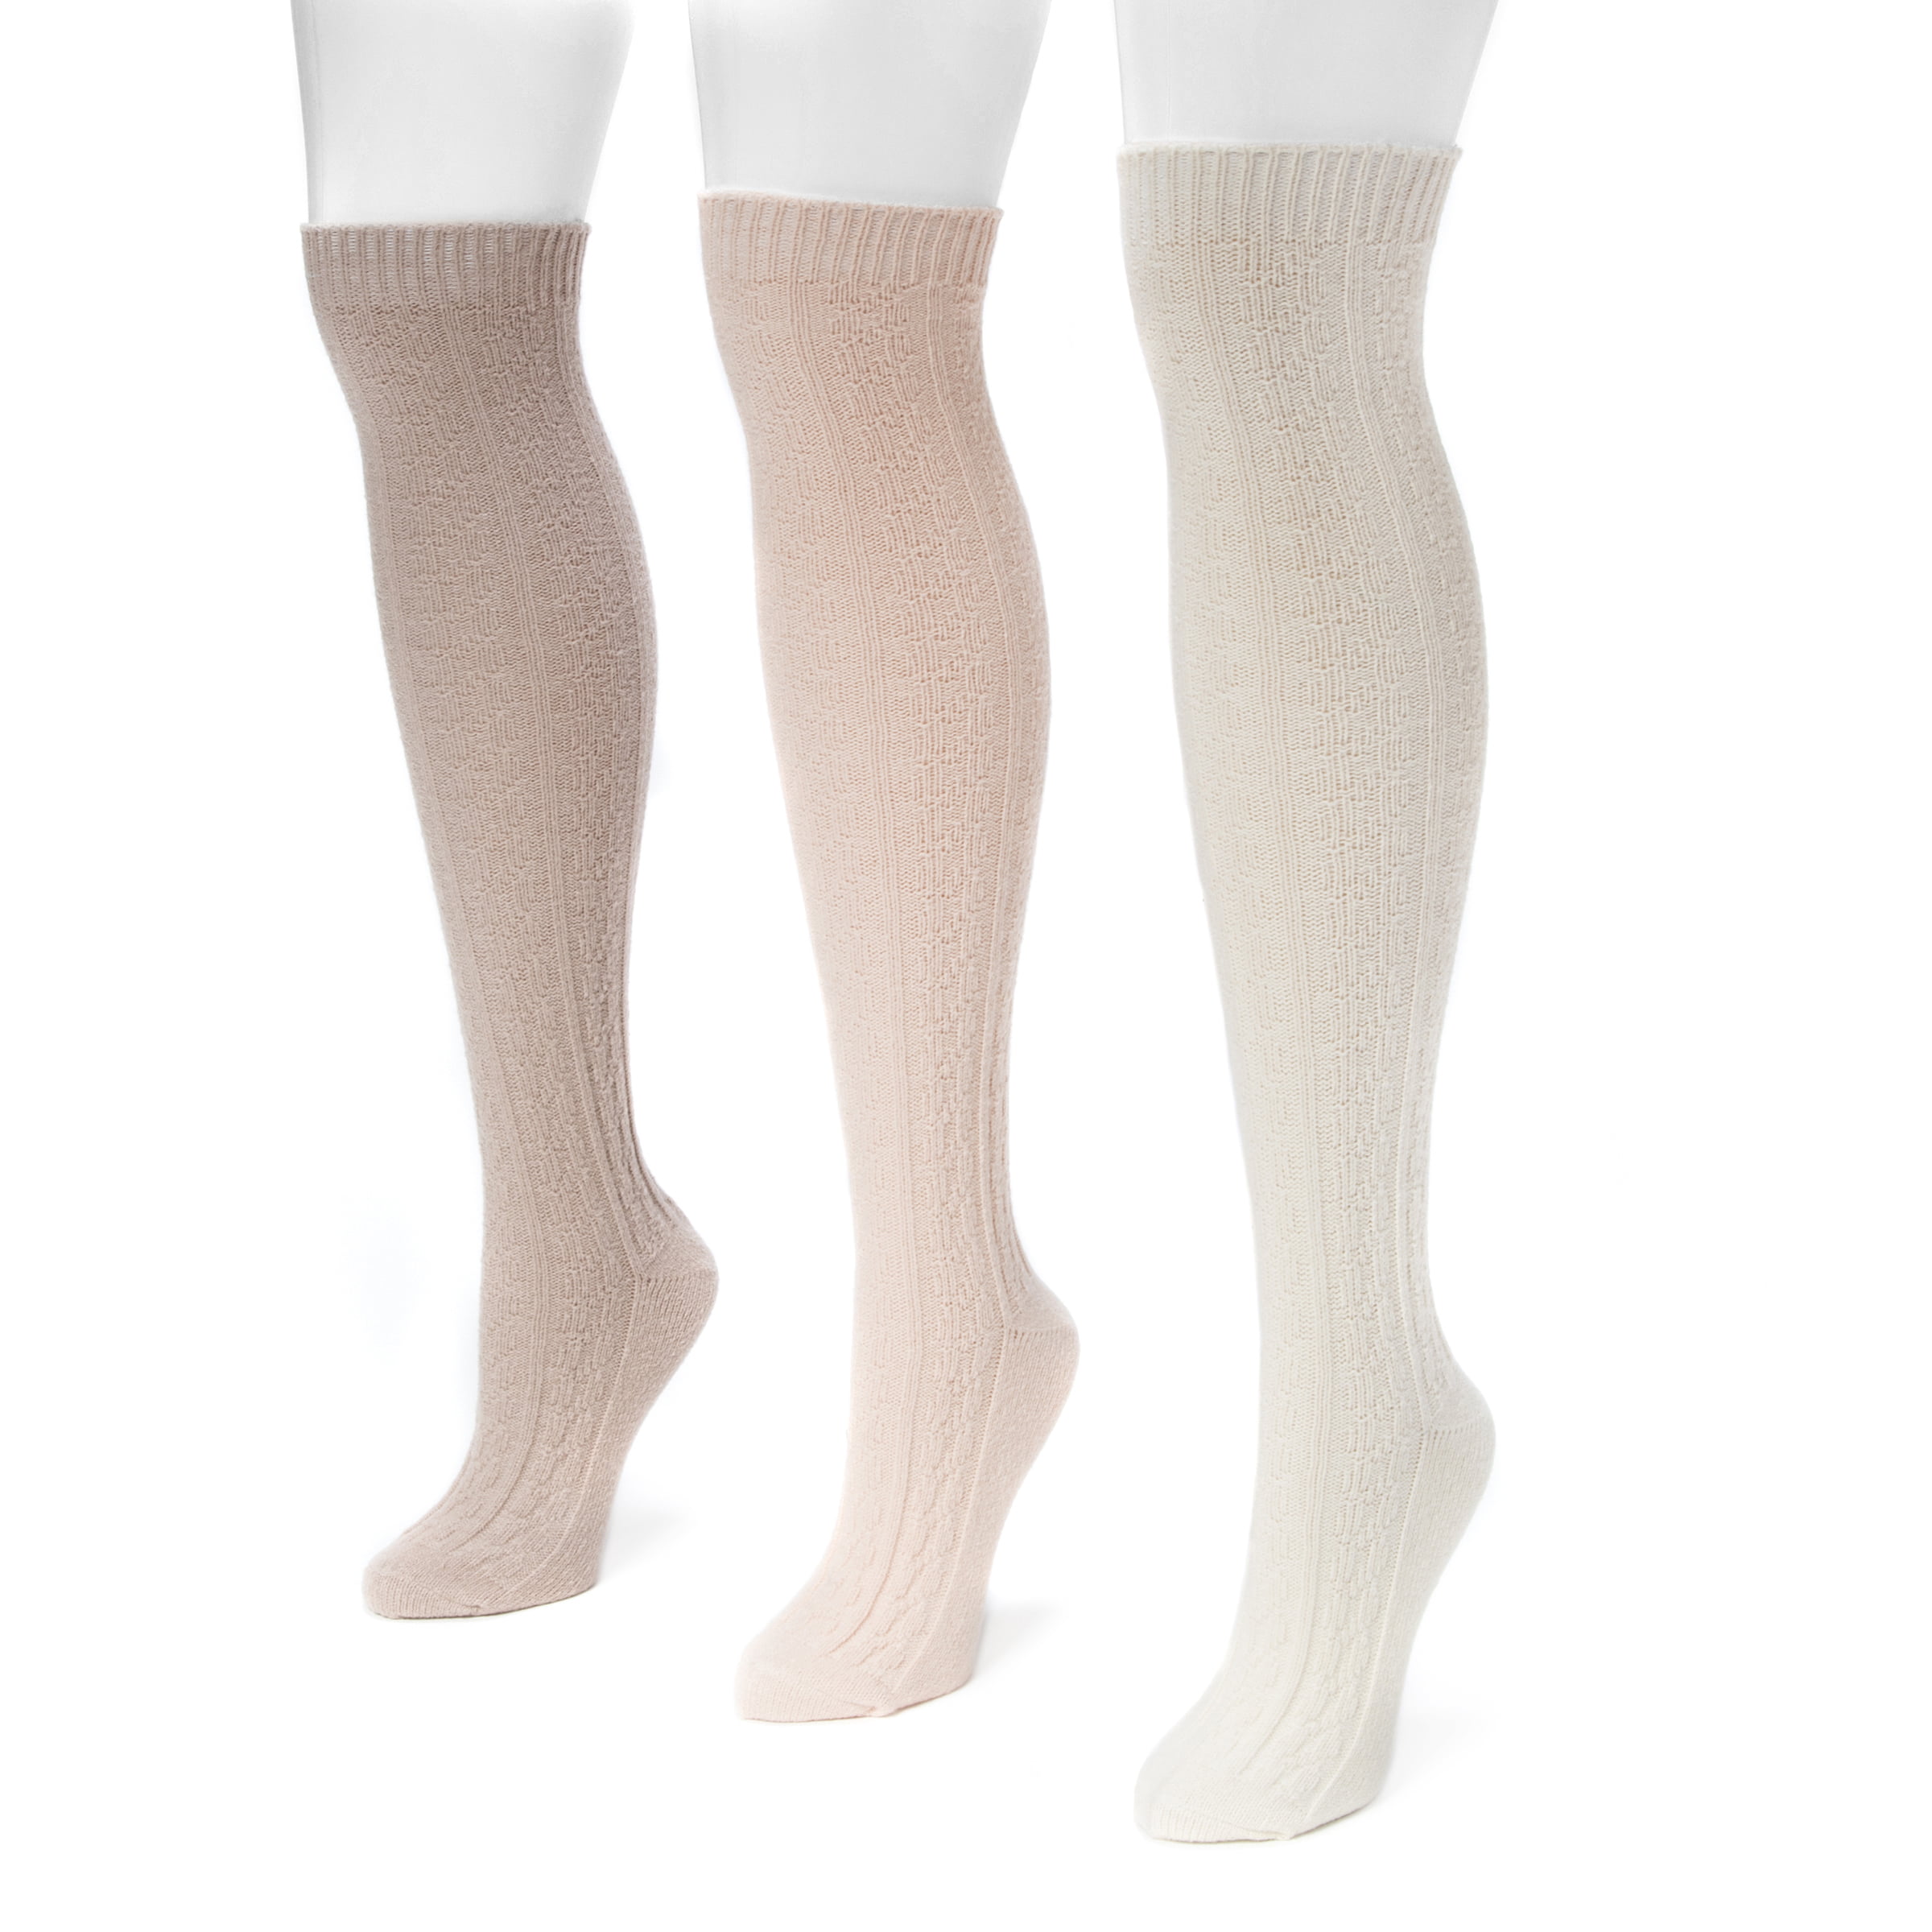 Women's 3 Pair Pack Cable Knee High Socks - Walmart.com